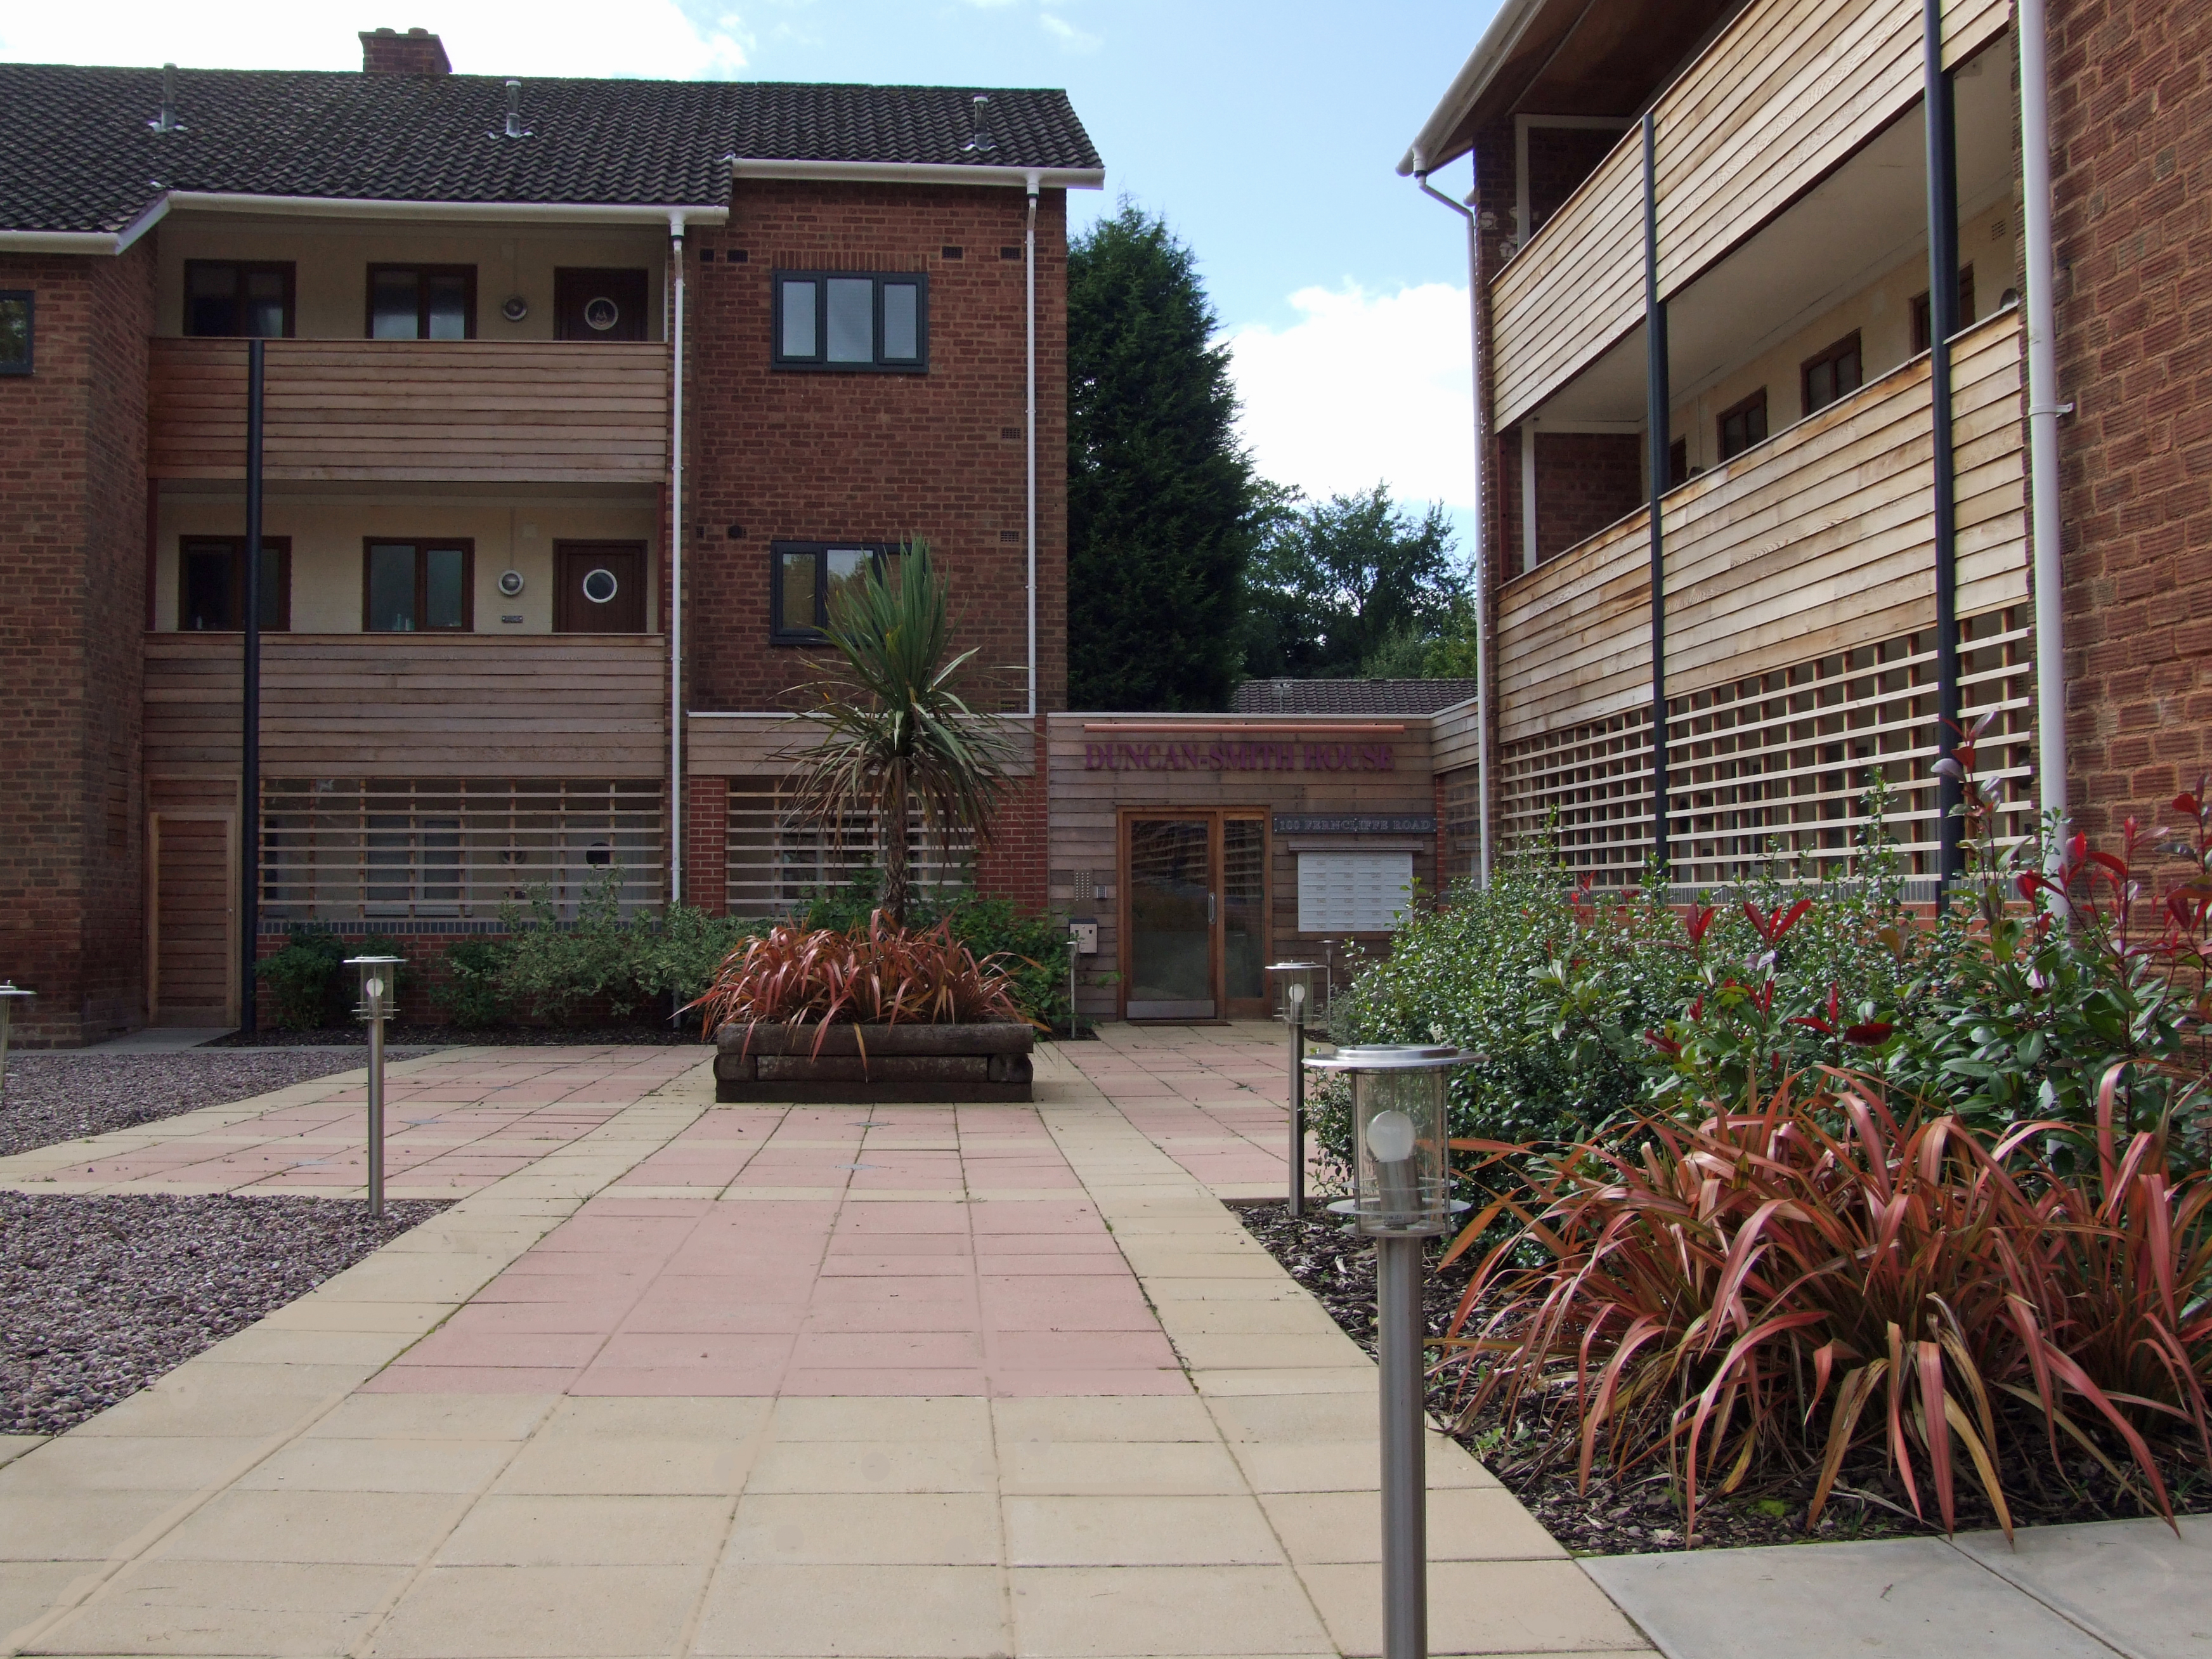 Duncan Smith House student accommodation near university of Birmingham